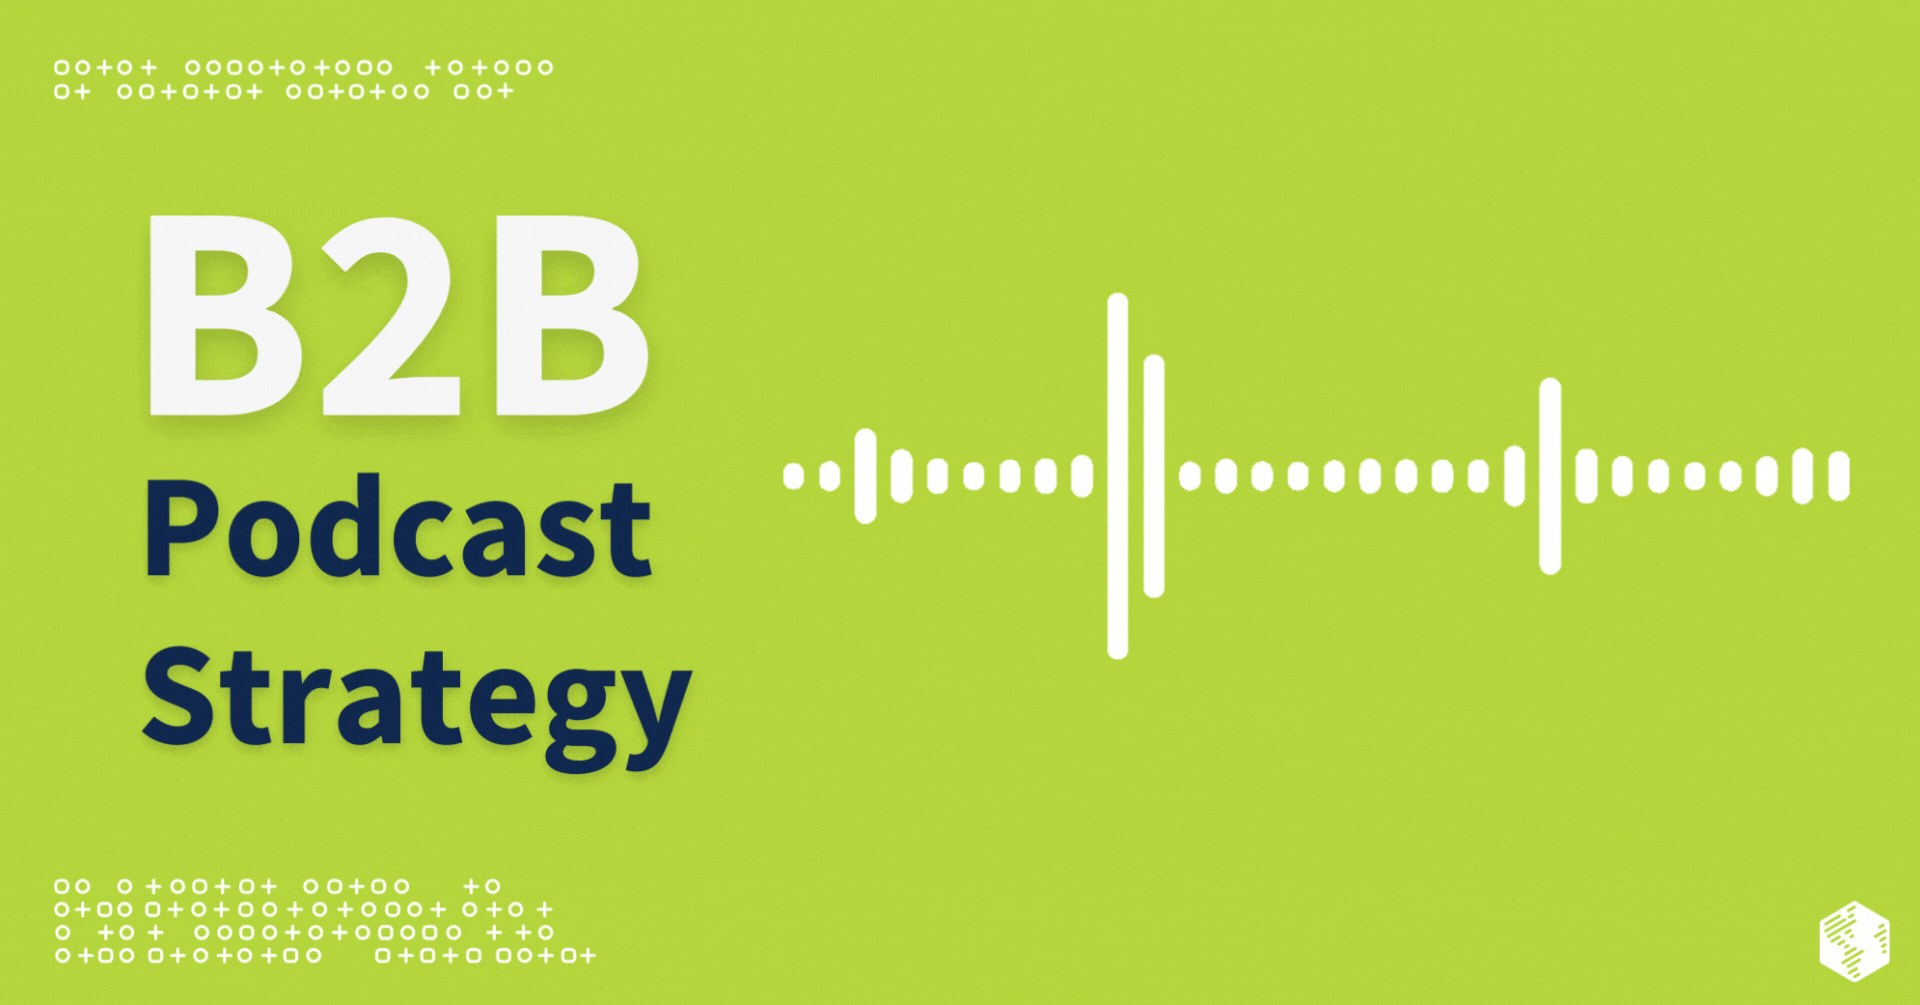 B2B Podcast Strategy